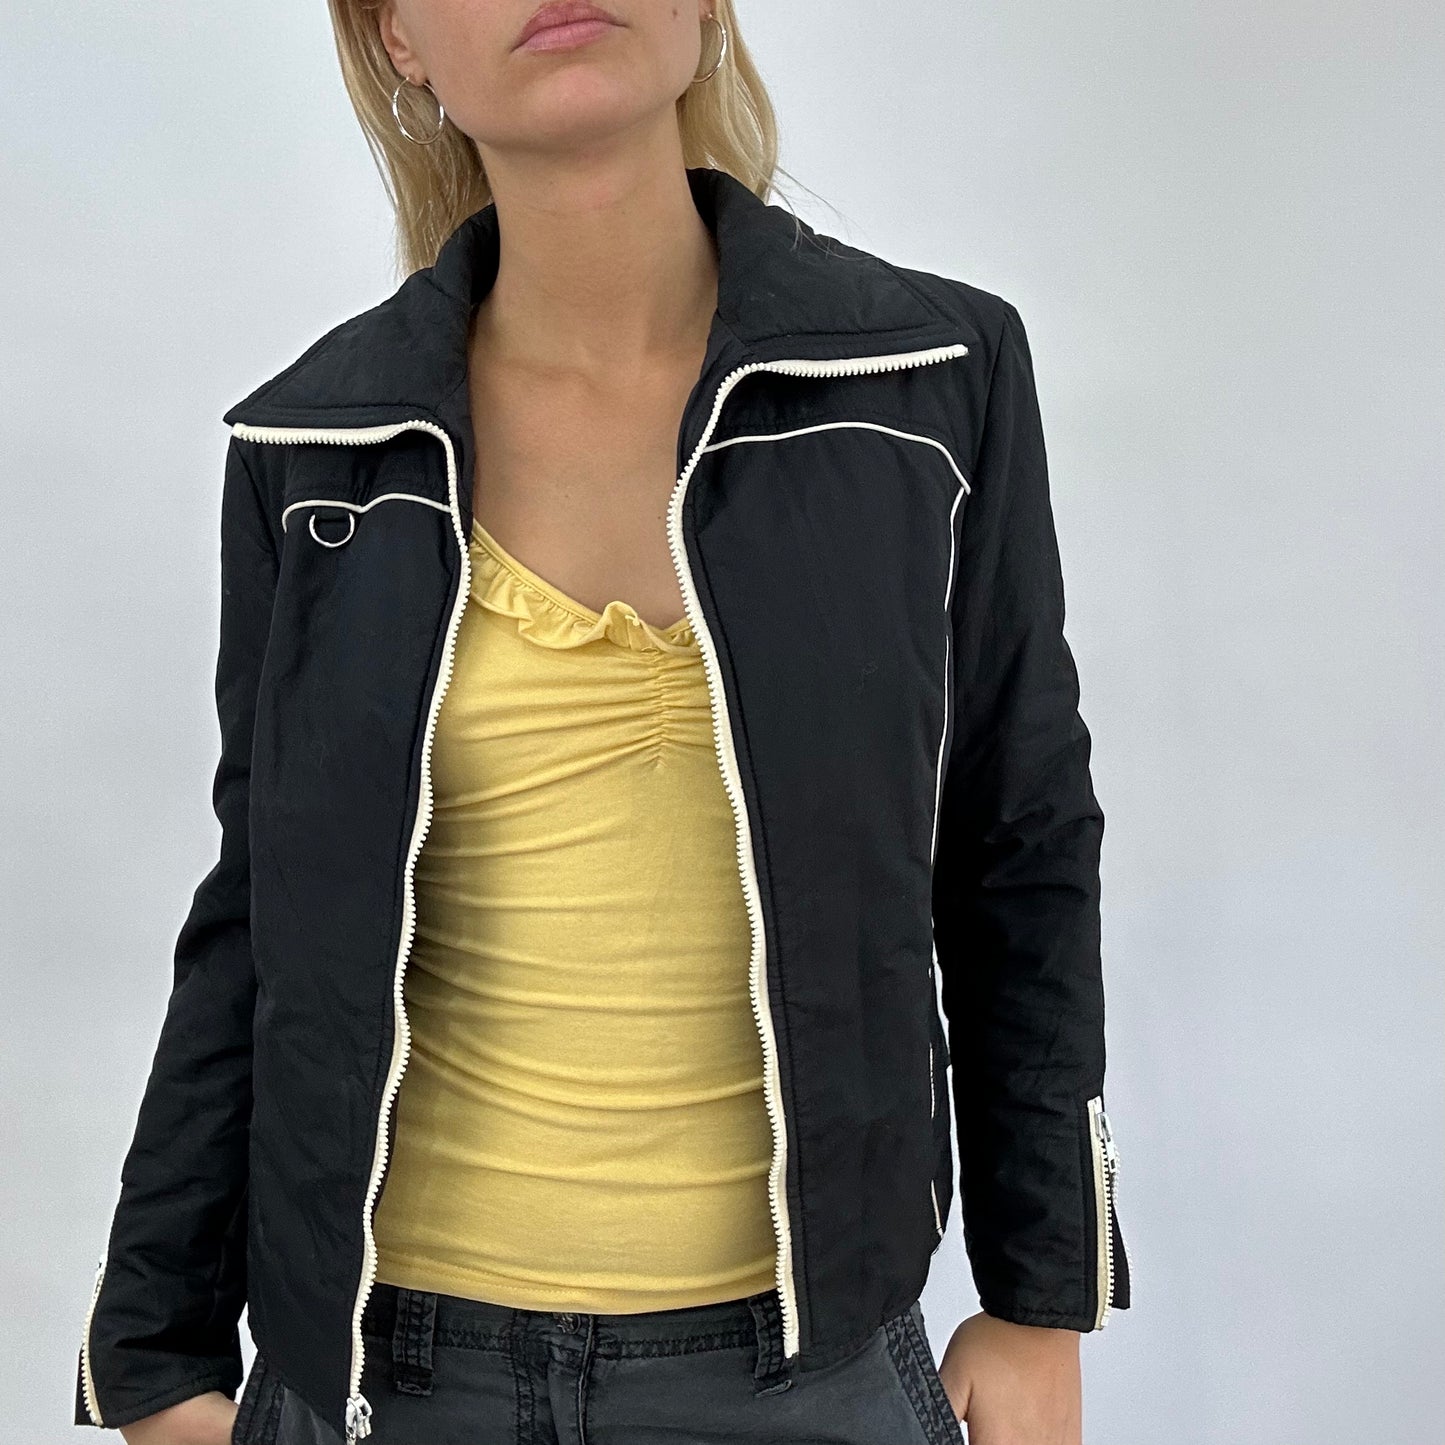 BEST PICKS | small black biker style jacket with contrast zip